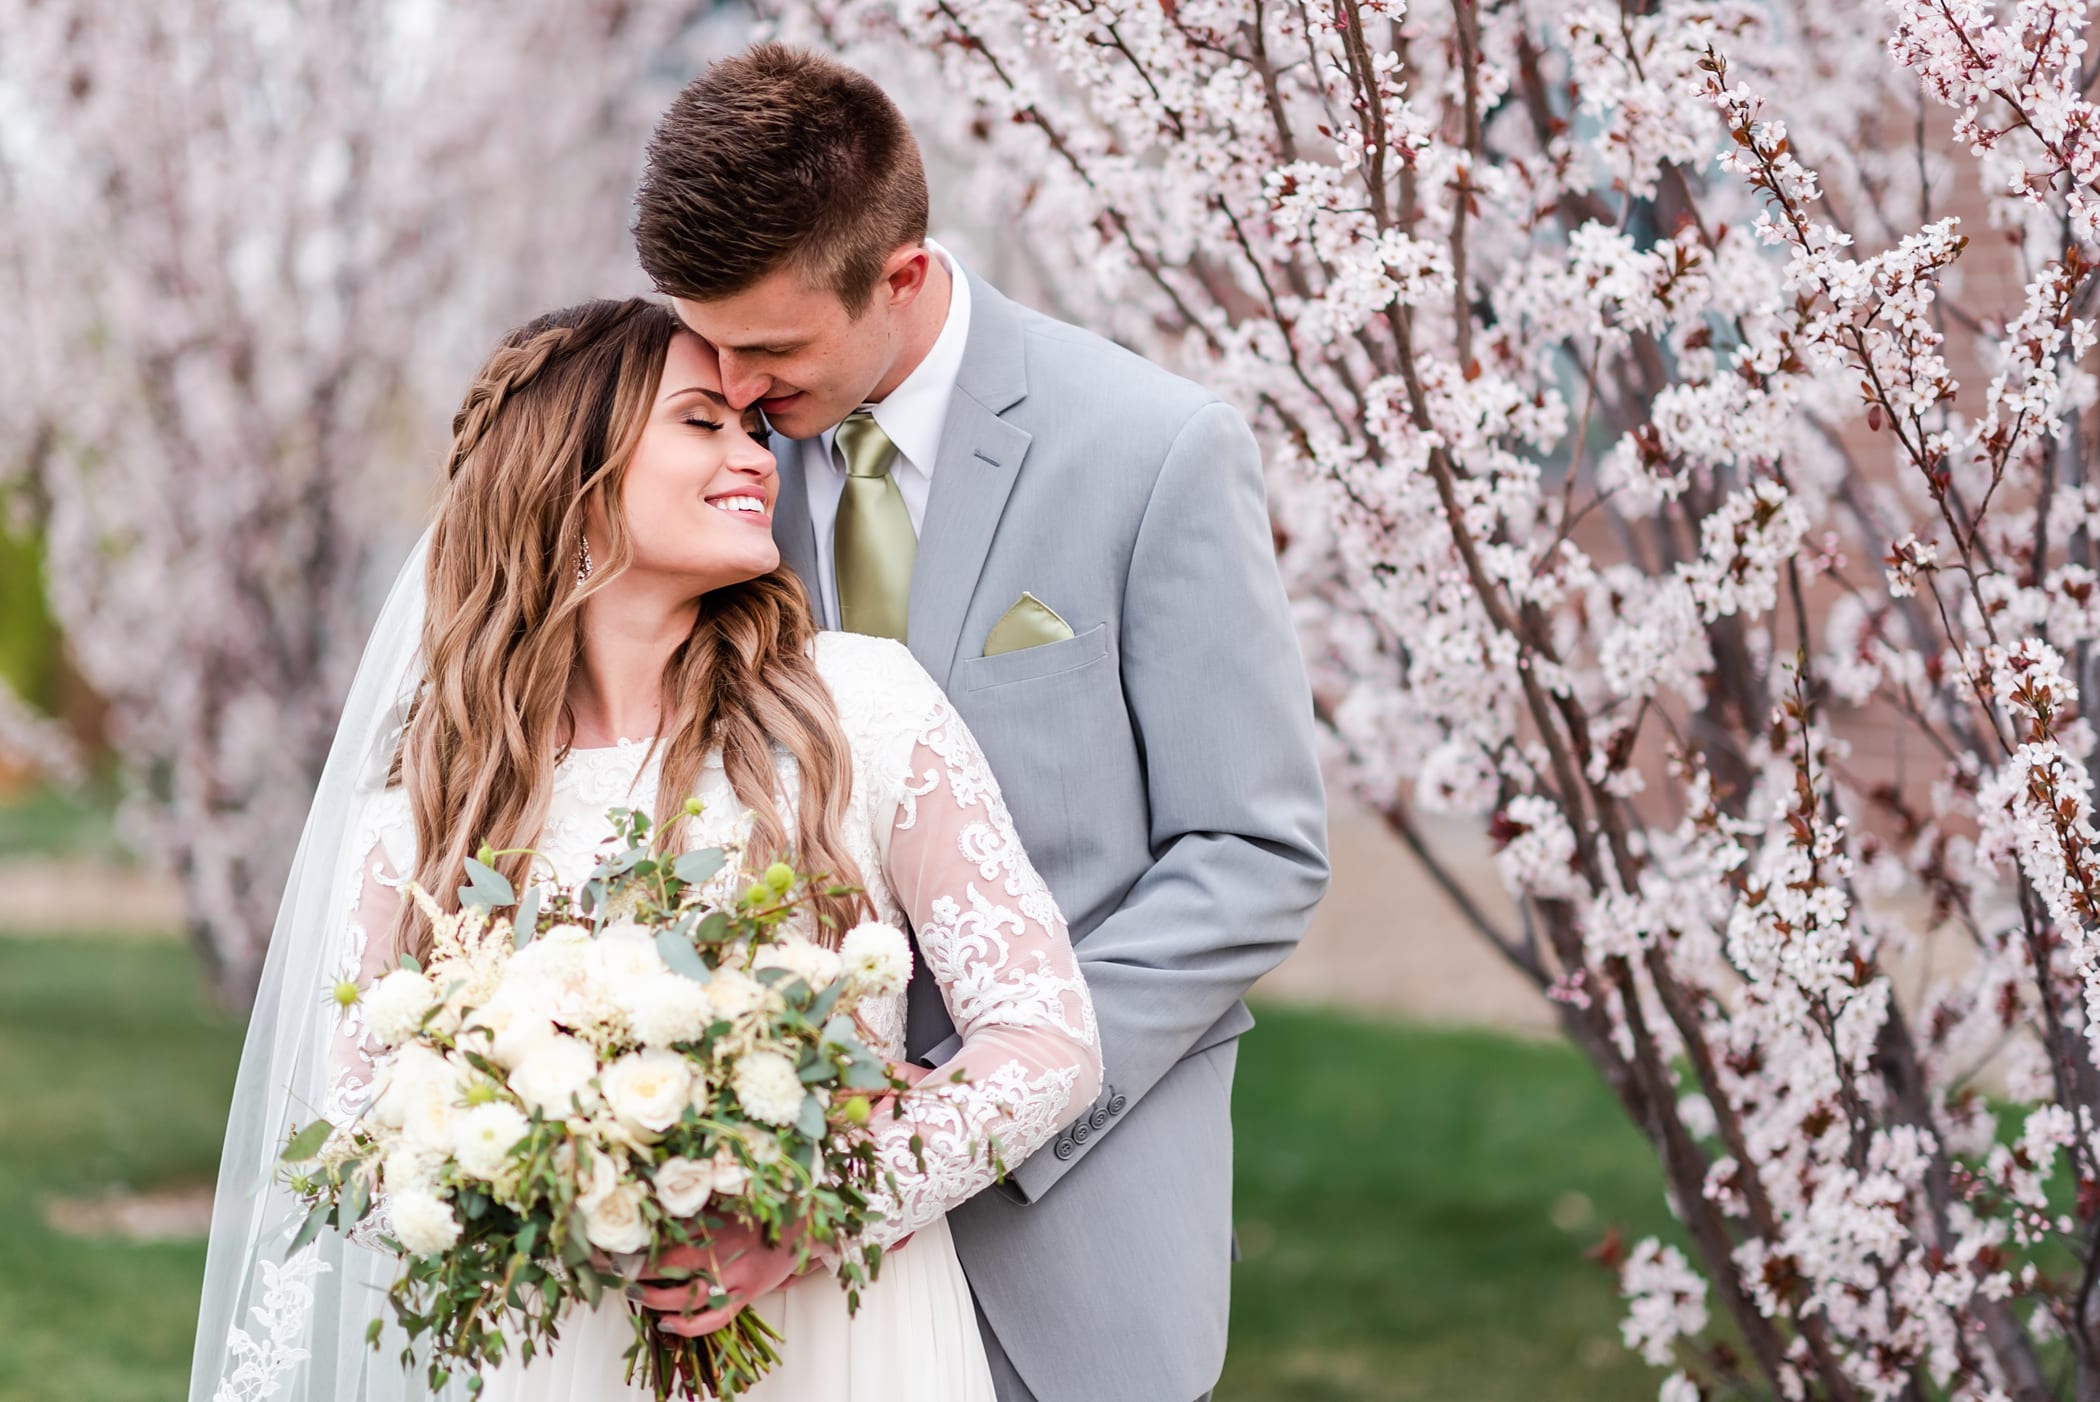 Spring blossom tree wedding photos with white organic bouquet